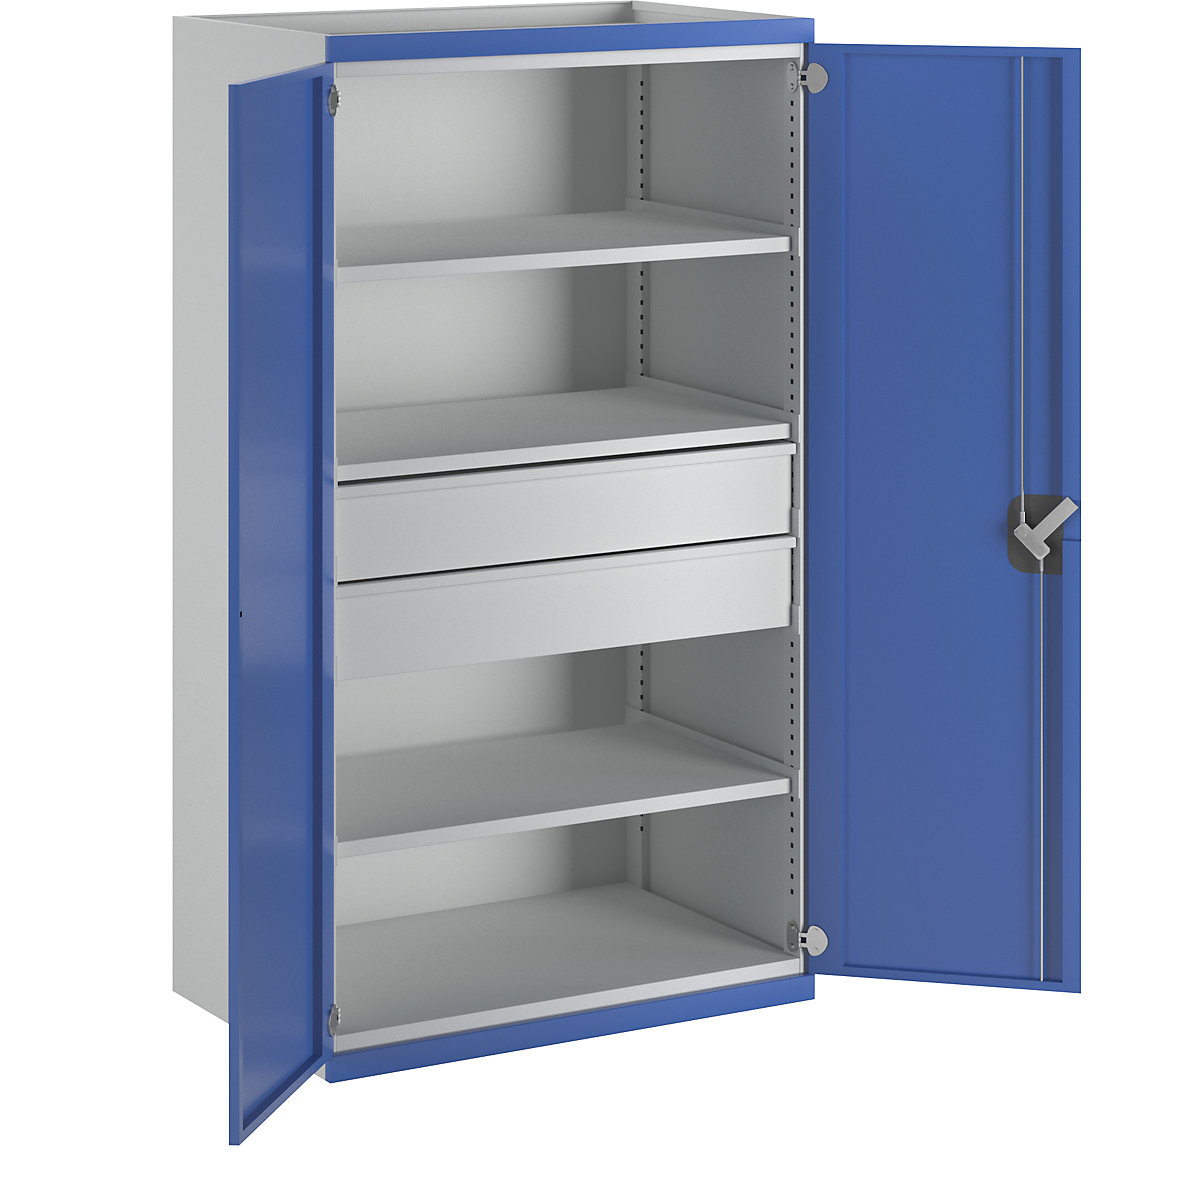 Heavy duty cupboard with 3 shelves - ANKE